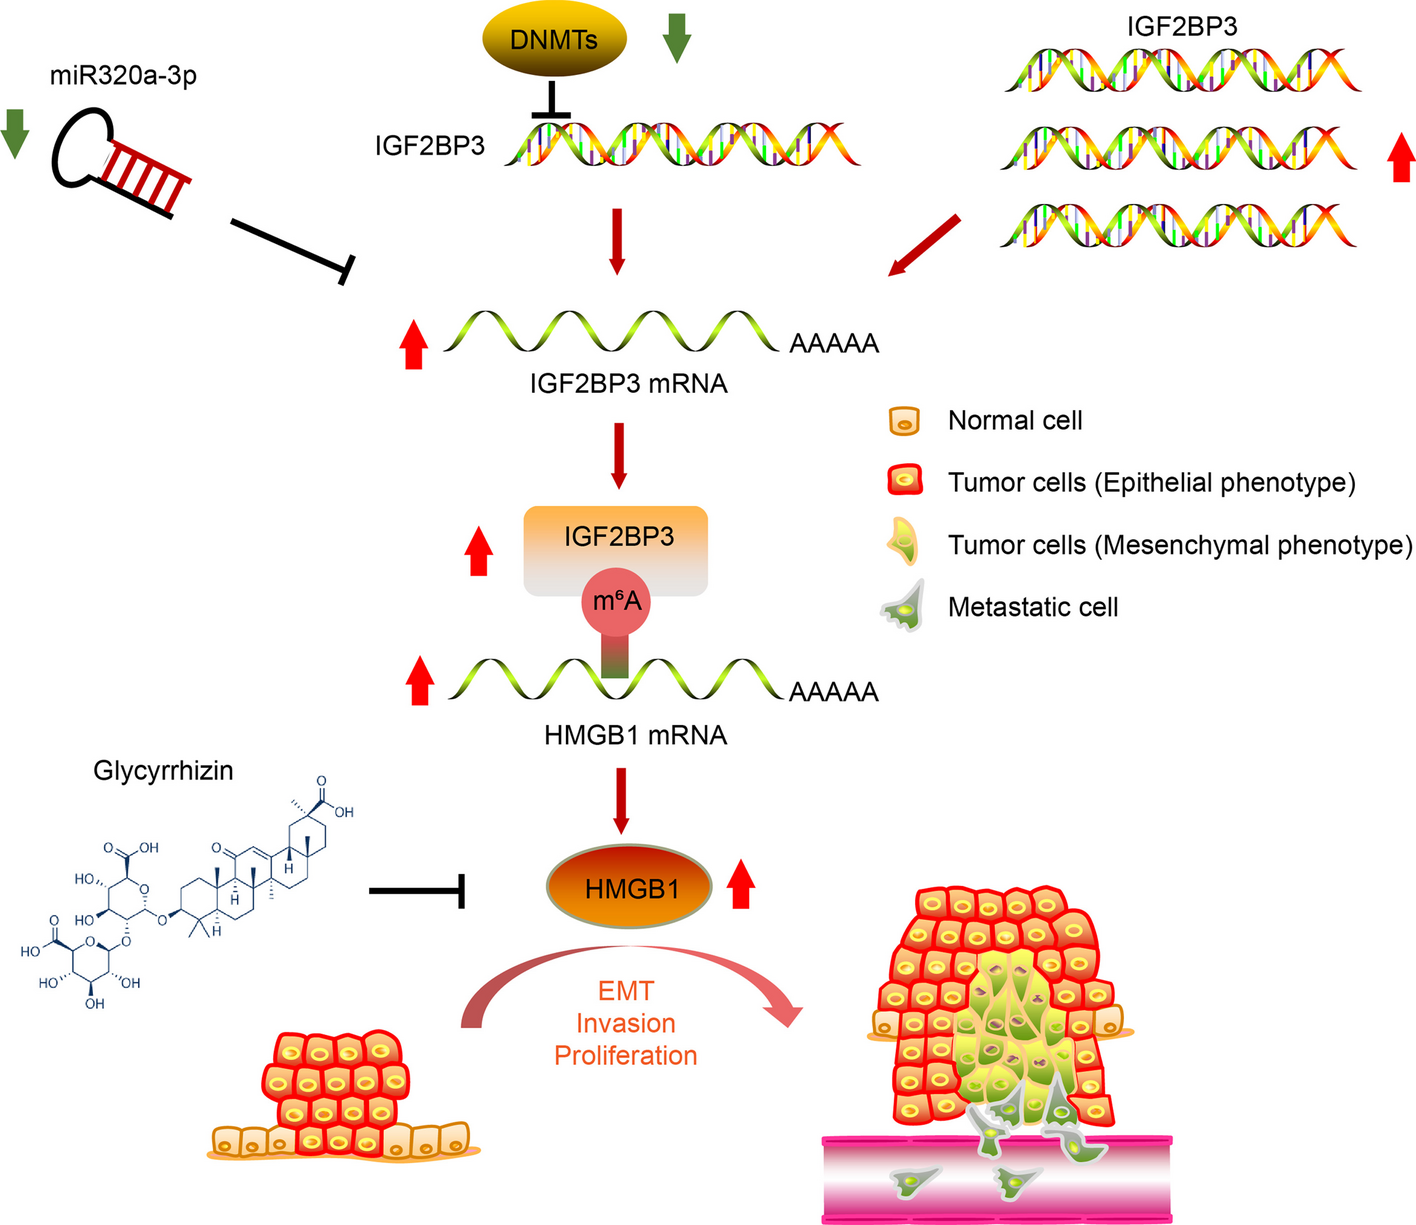 IGF2BP3 prevent HMGB1 mRNA decay in bladder cancer and development